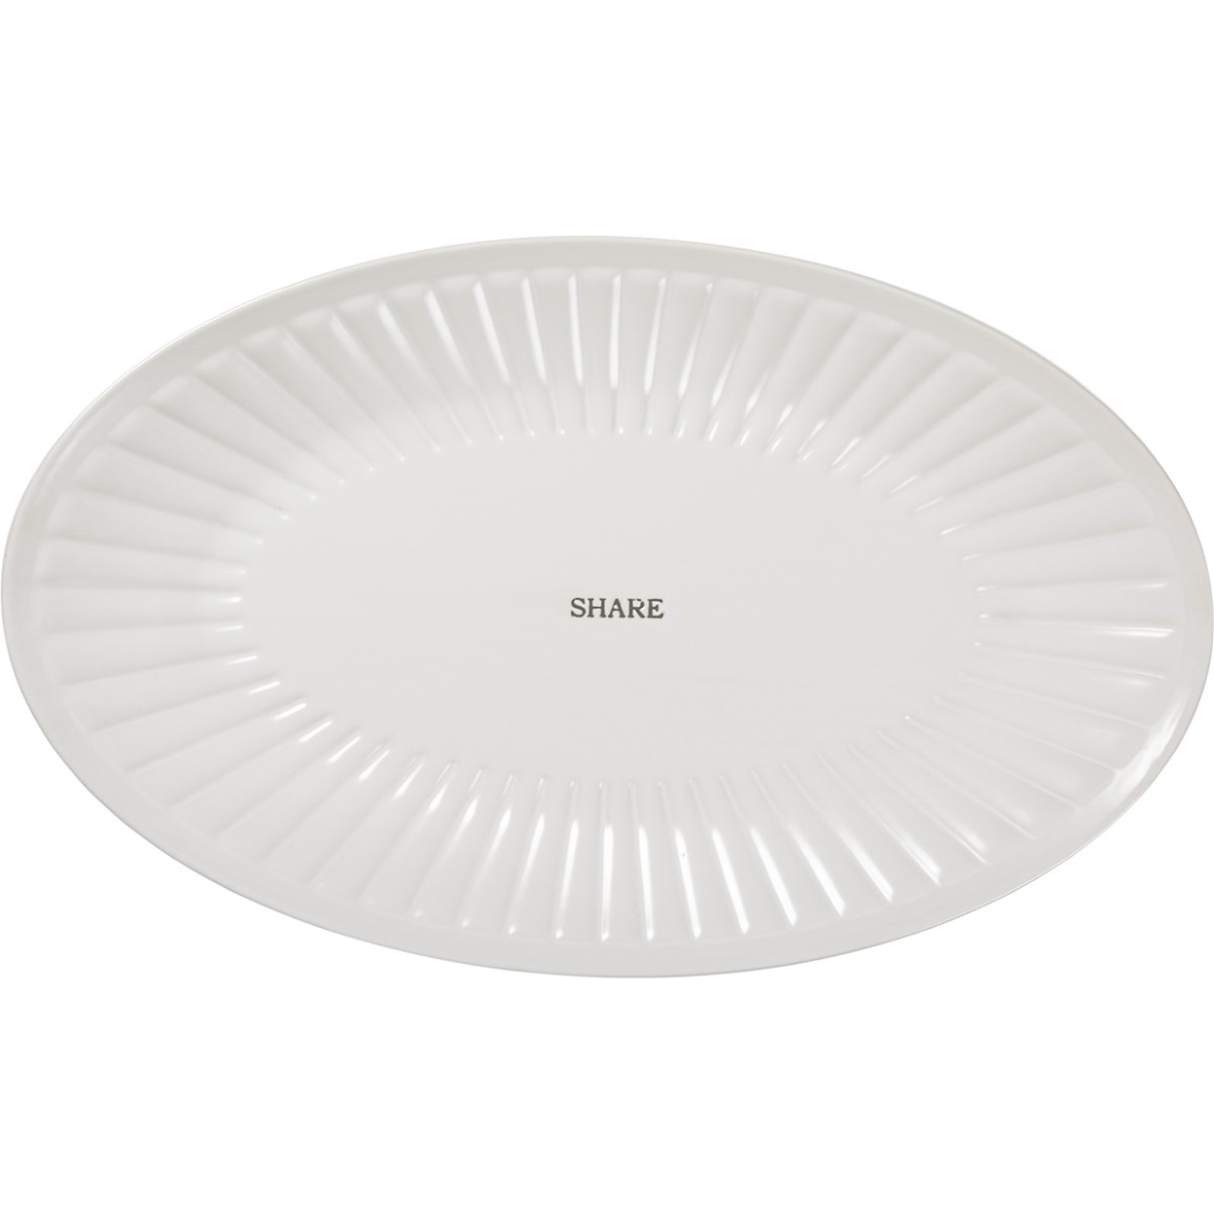 SHARE Sentiment Oval Stoneware Platter